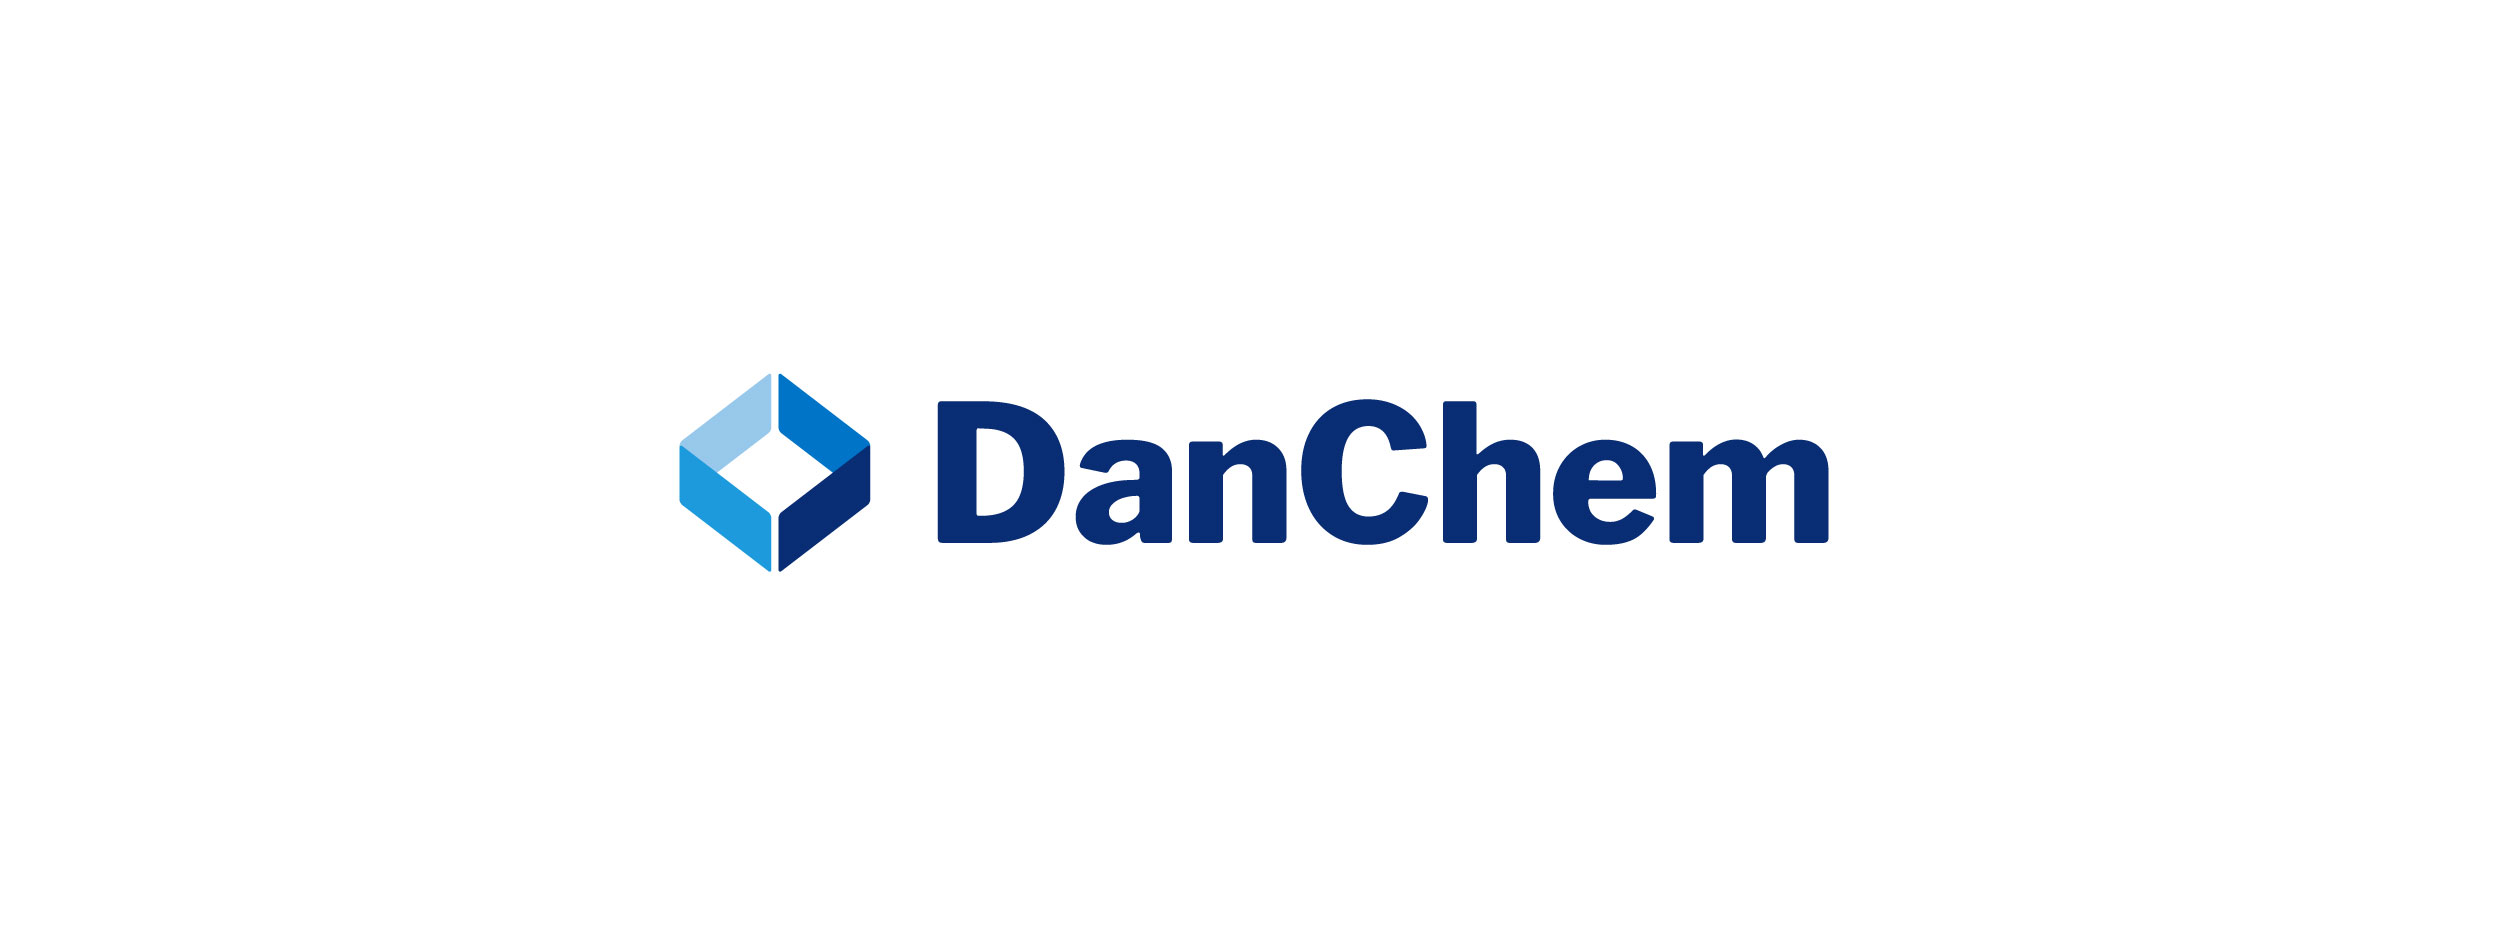 DanChem Logo Development